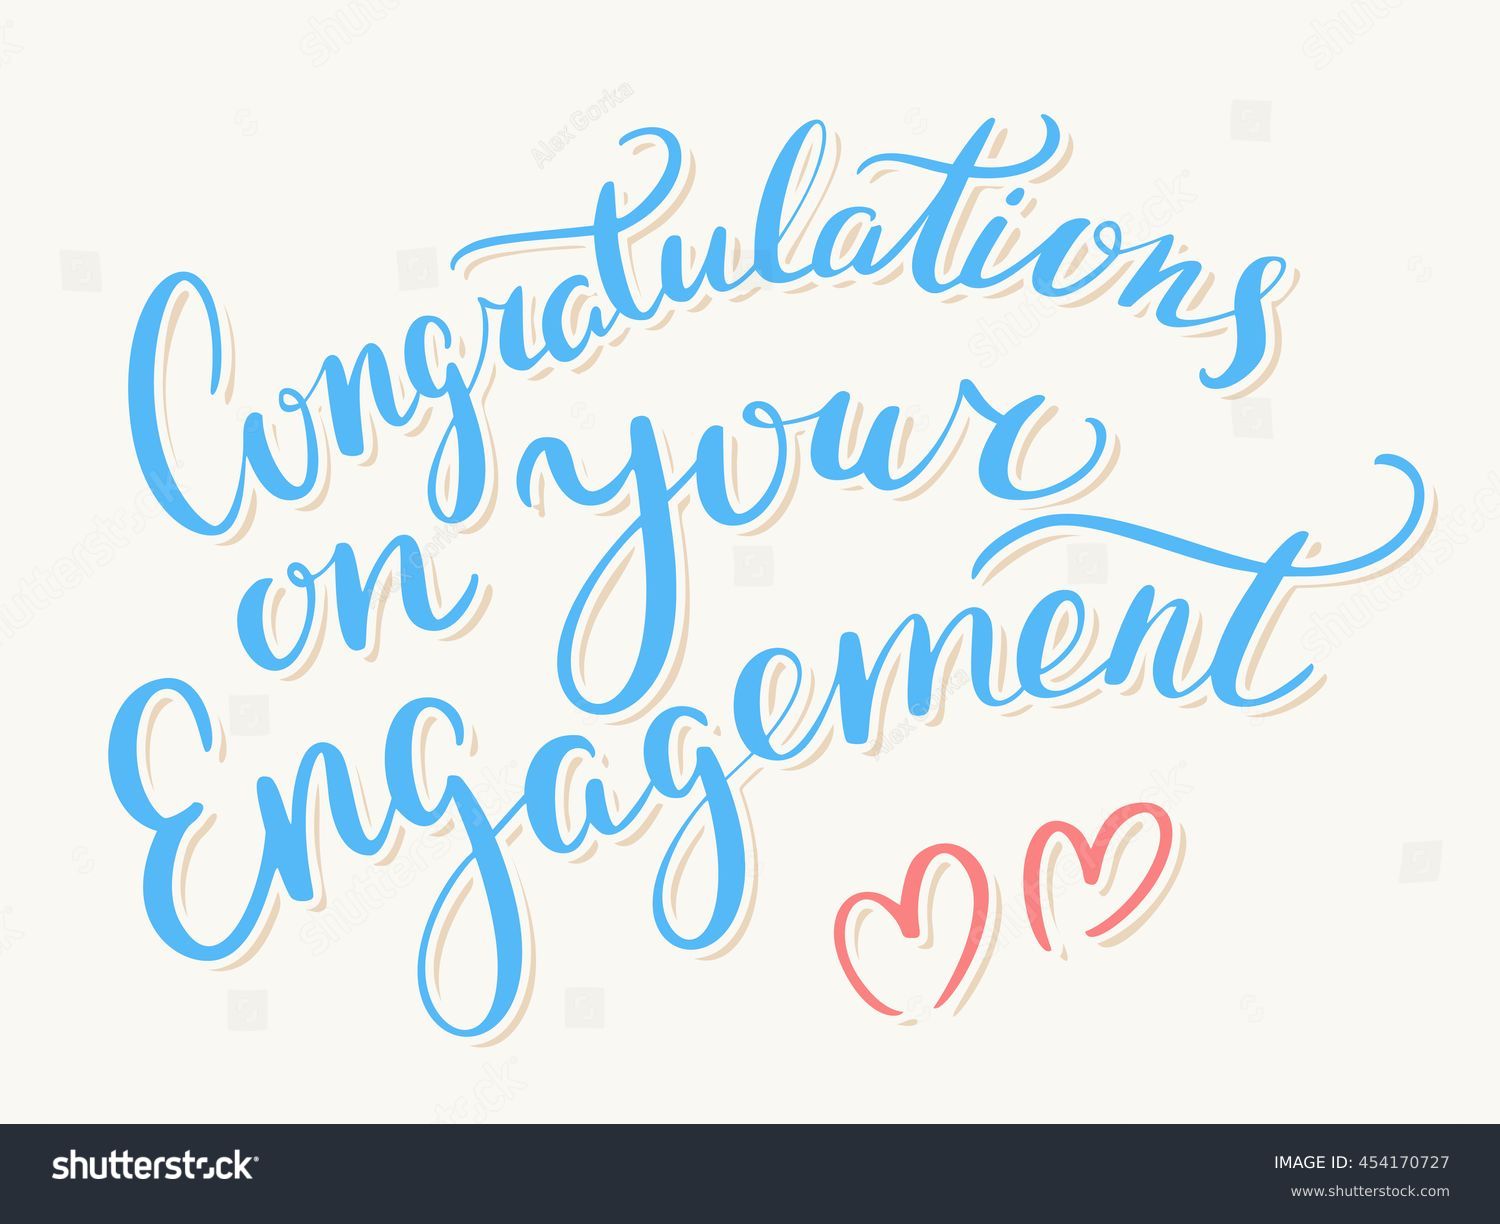 free clipart engagement congratulations - photo #20